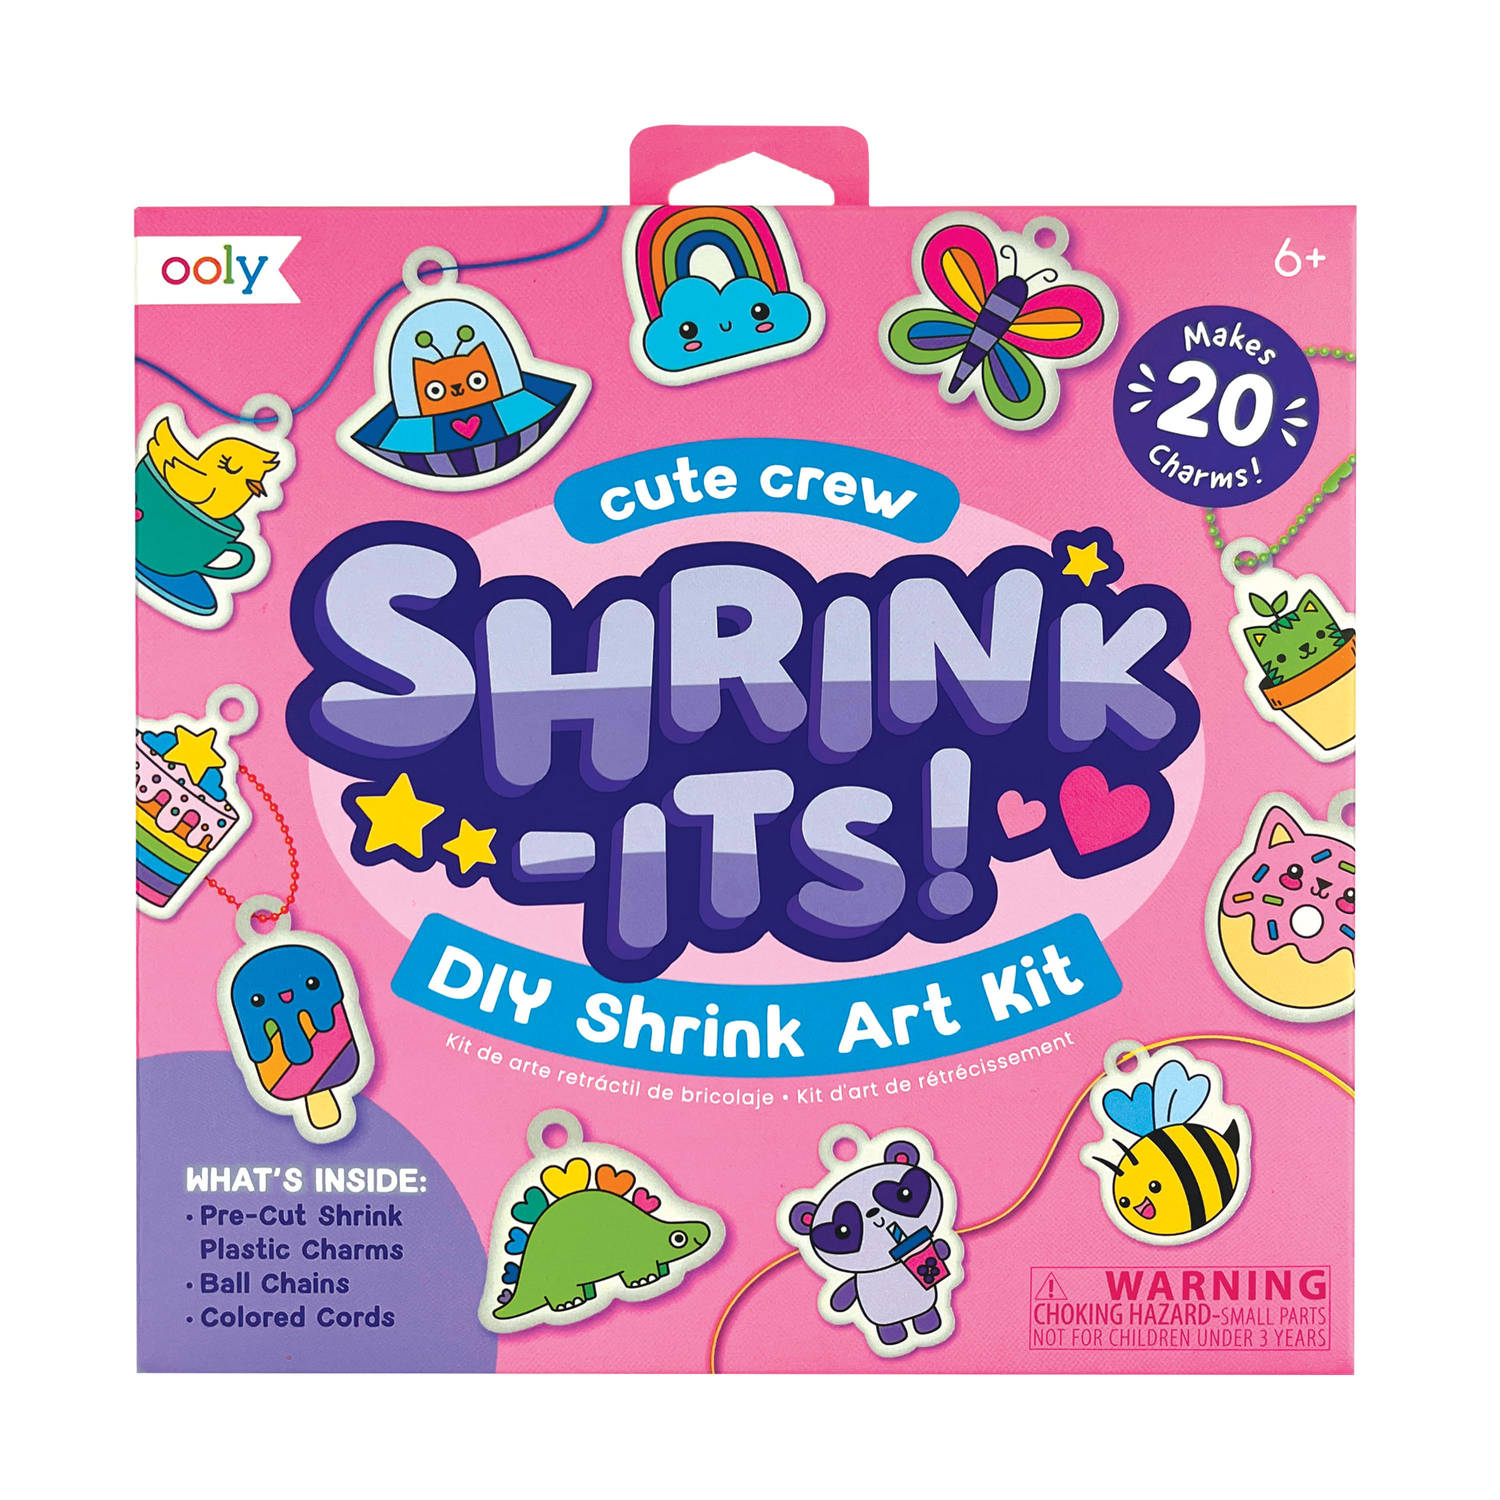 Ooly - Shrink-Its! D.I.Y. Shrink Art Kit - Cute Crew